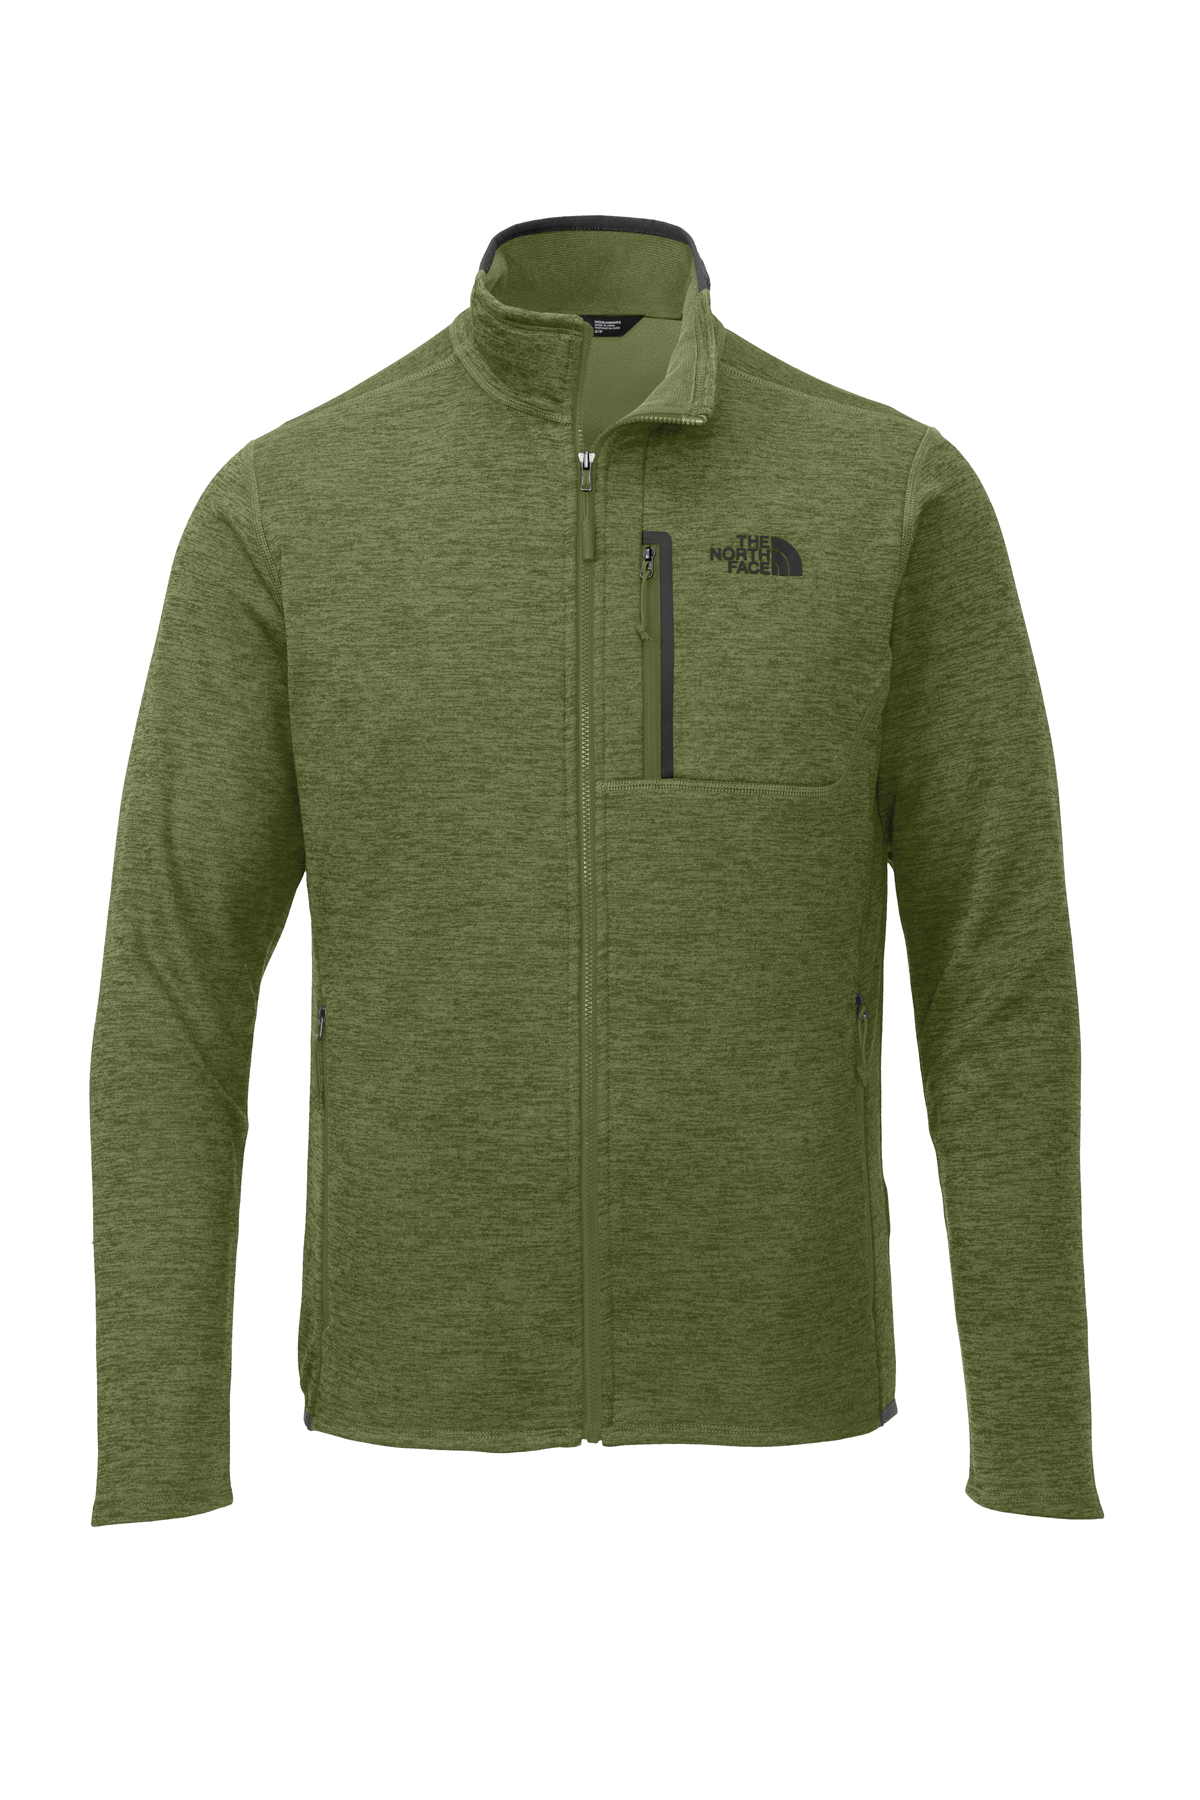 The North Face Skyline Full-Zip Fleece Jacket, Product